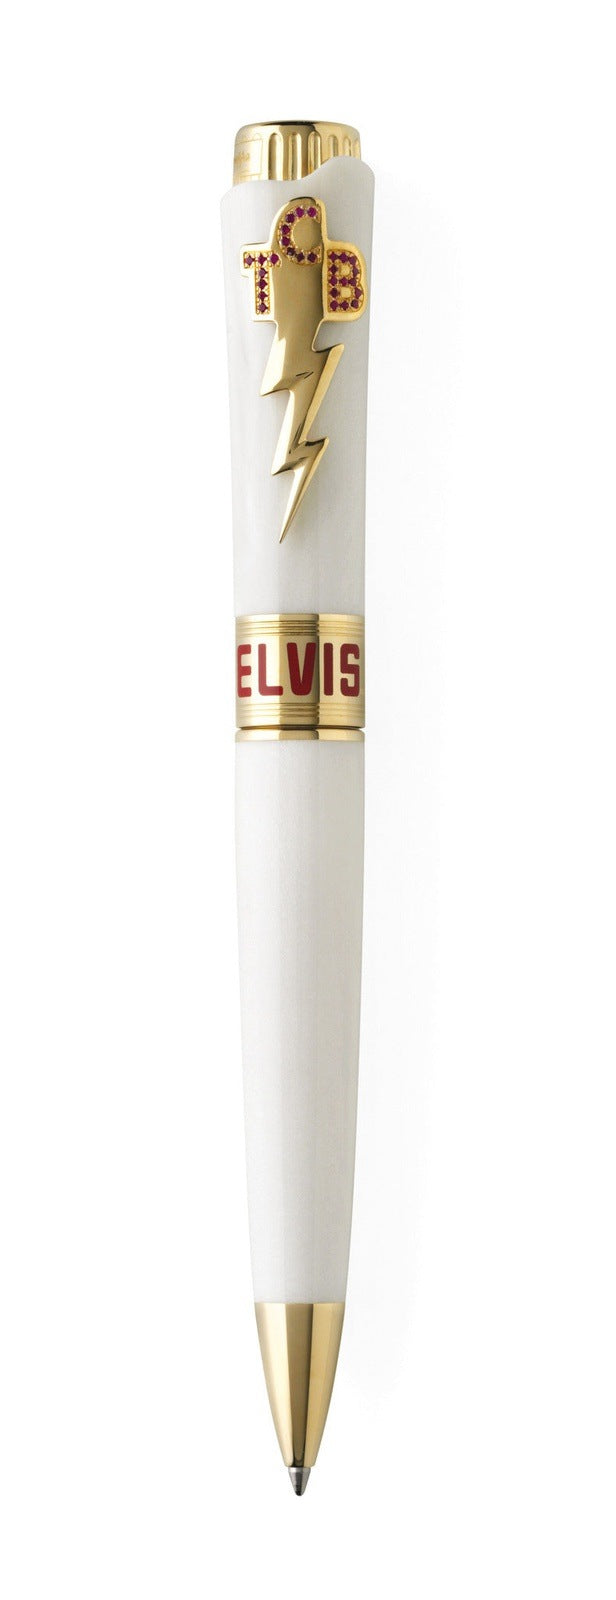 Elvis Presley Las Vegas Ballpoint Pen - Gold & Resin